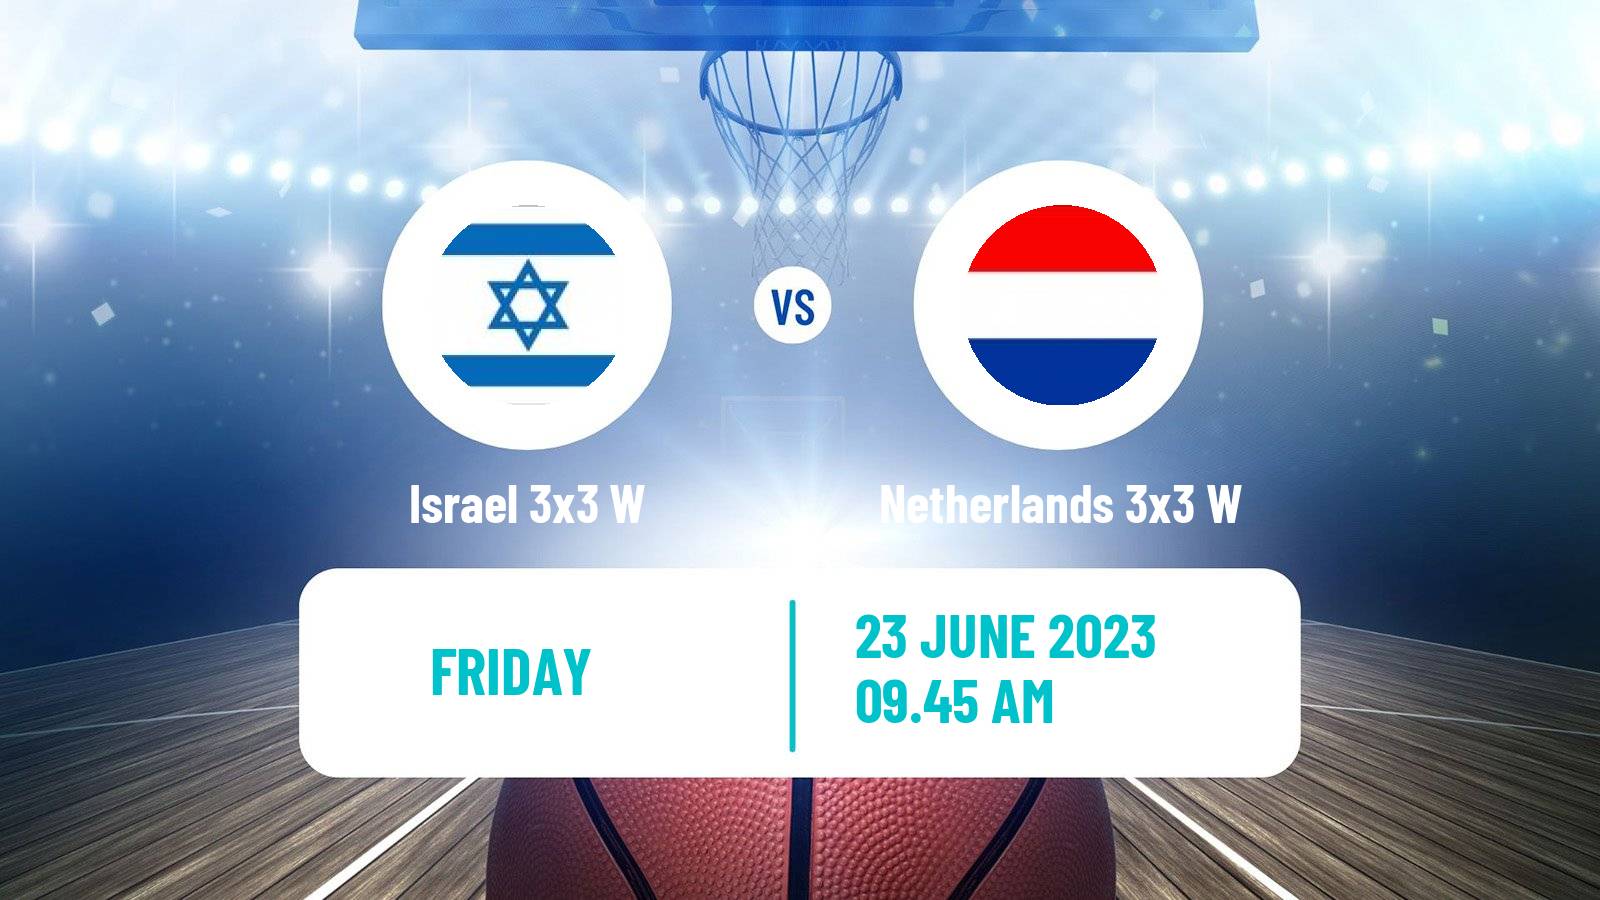 Basketball European Games 3x3 Women Israel 3x3 W - Netherlands 3x3 W